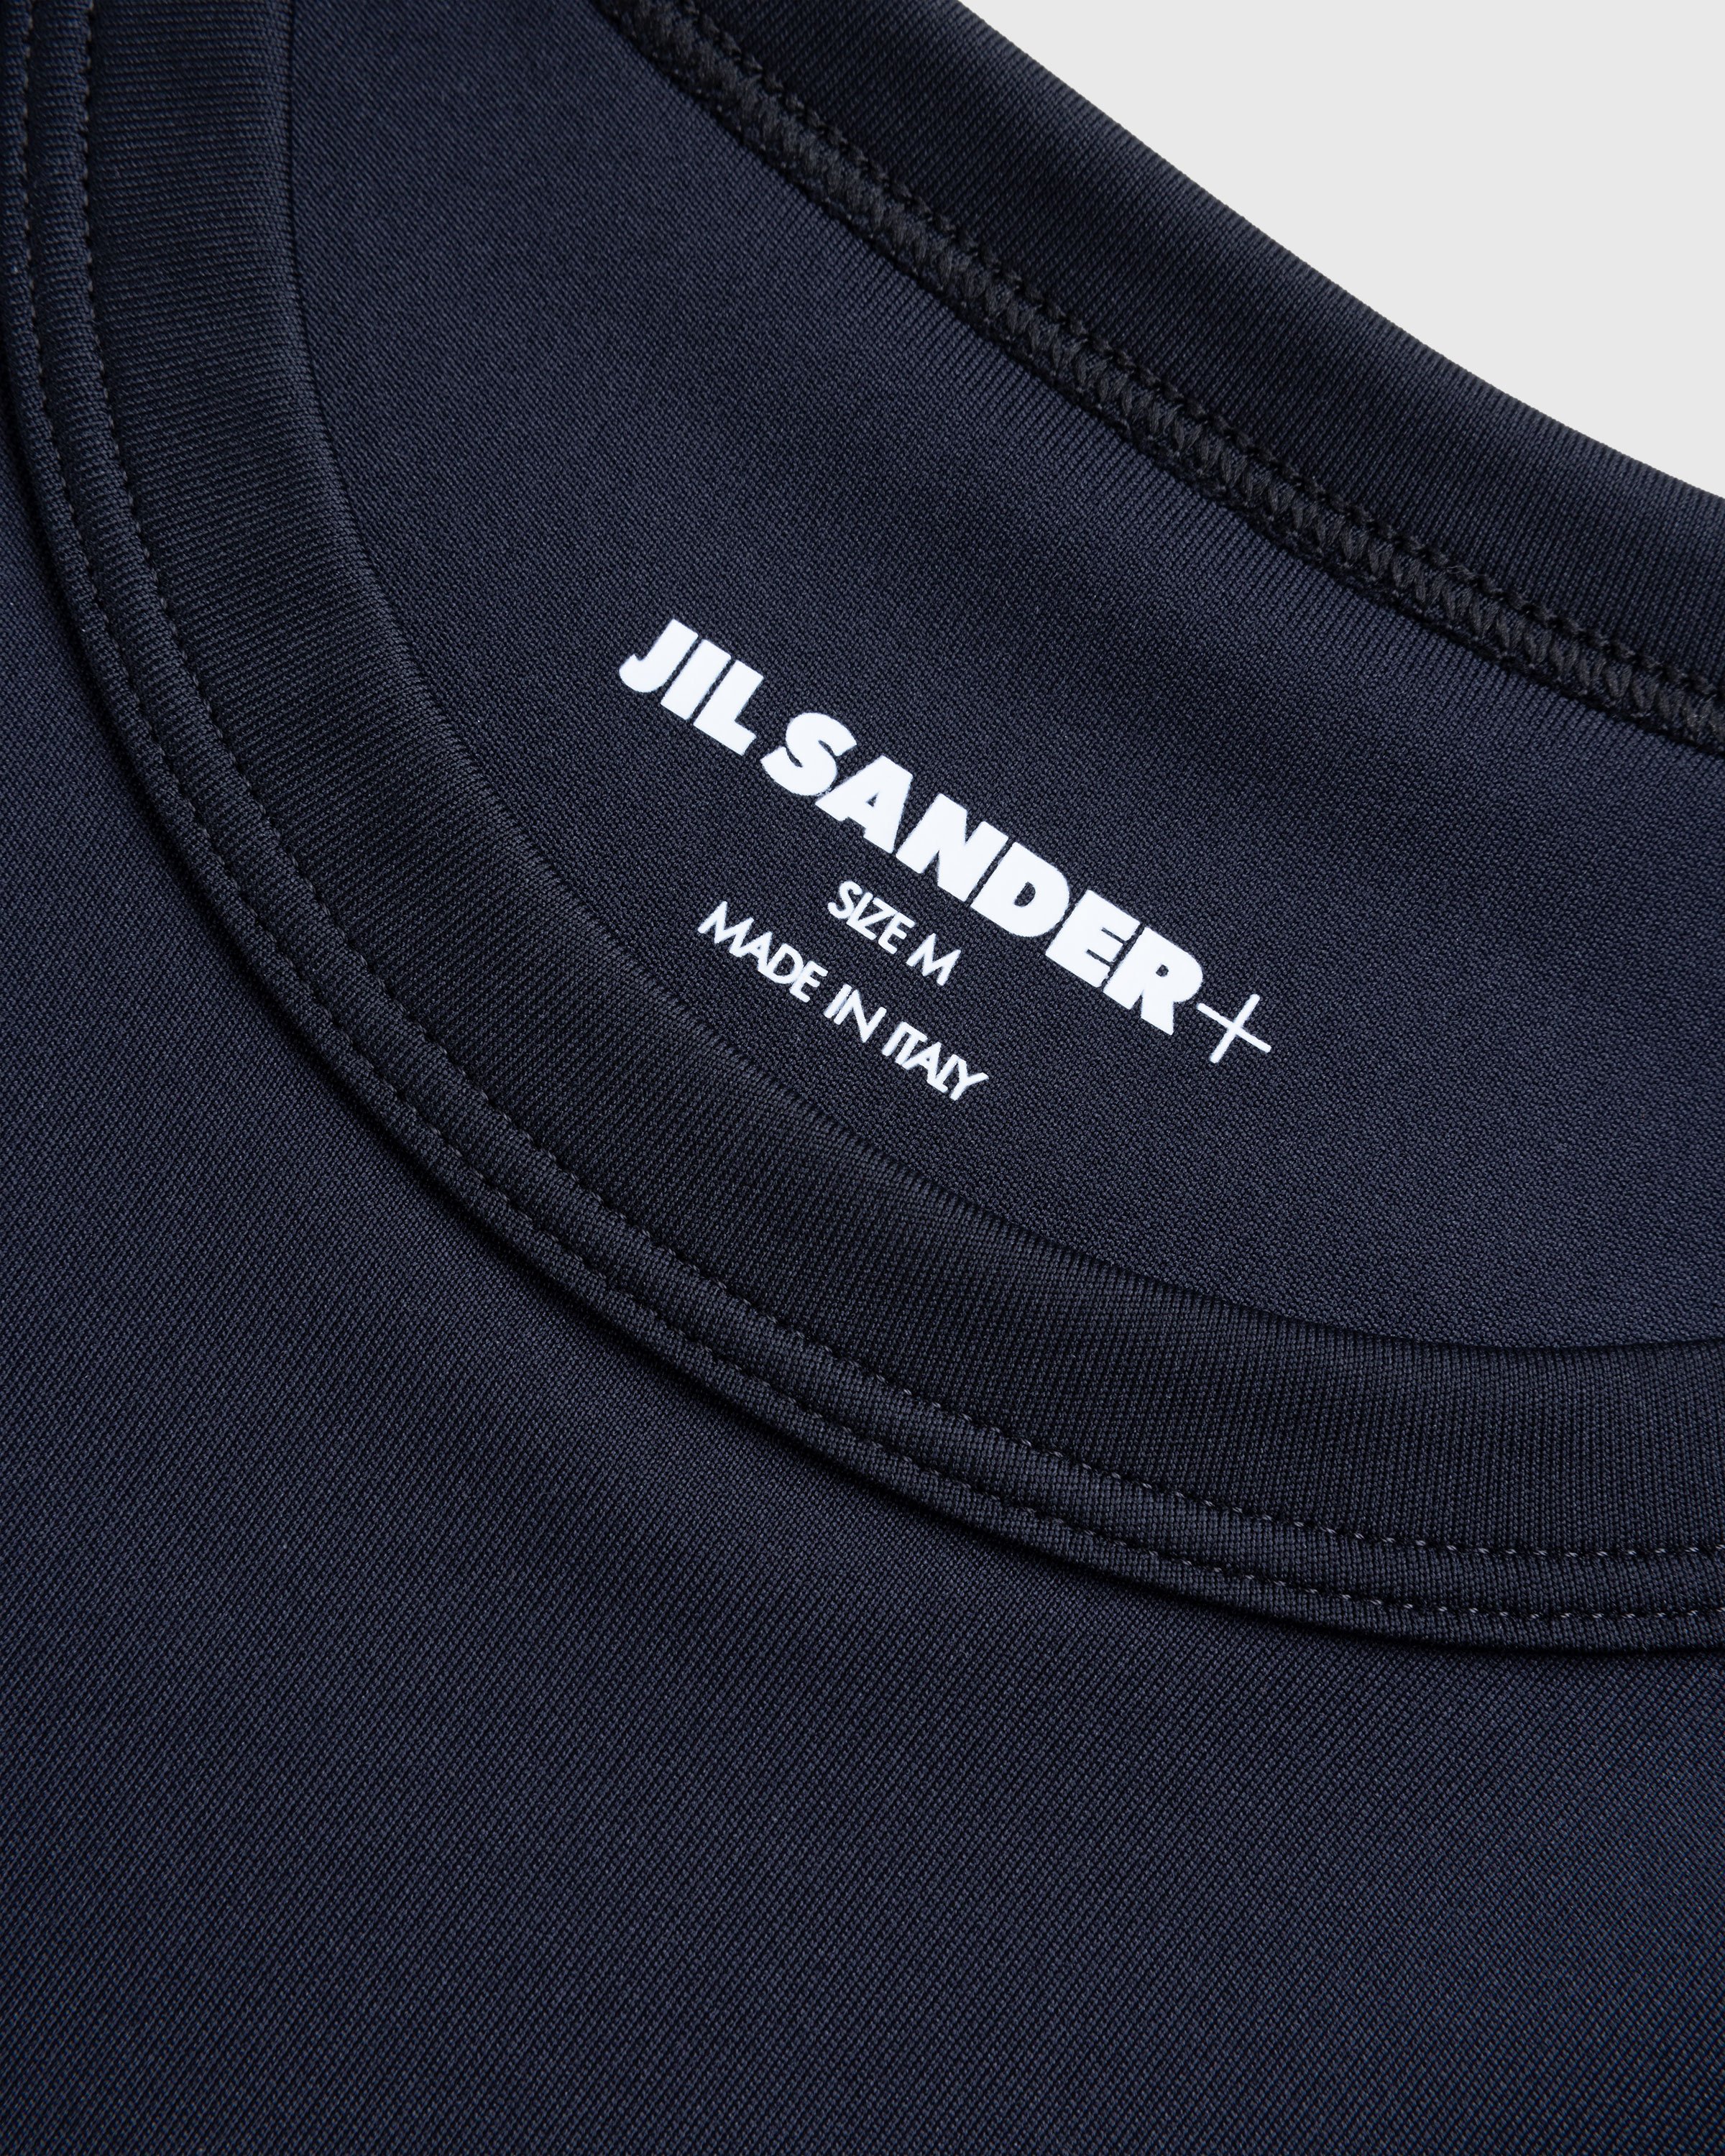 Jil Sander - Logo T-Shirt Black - Clothing - Black - Image 7